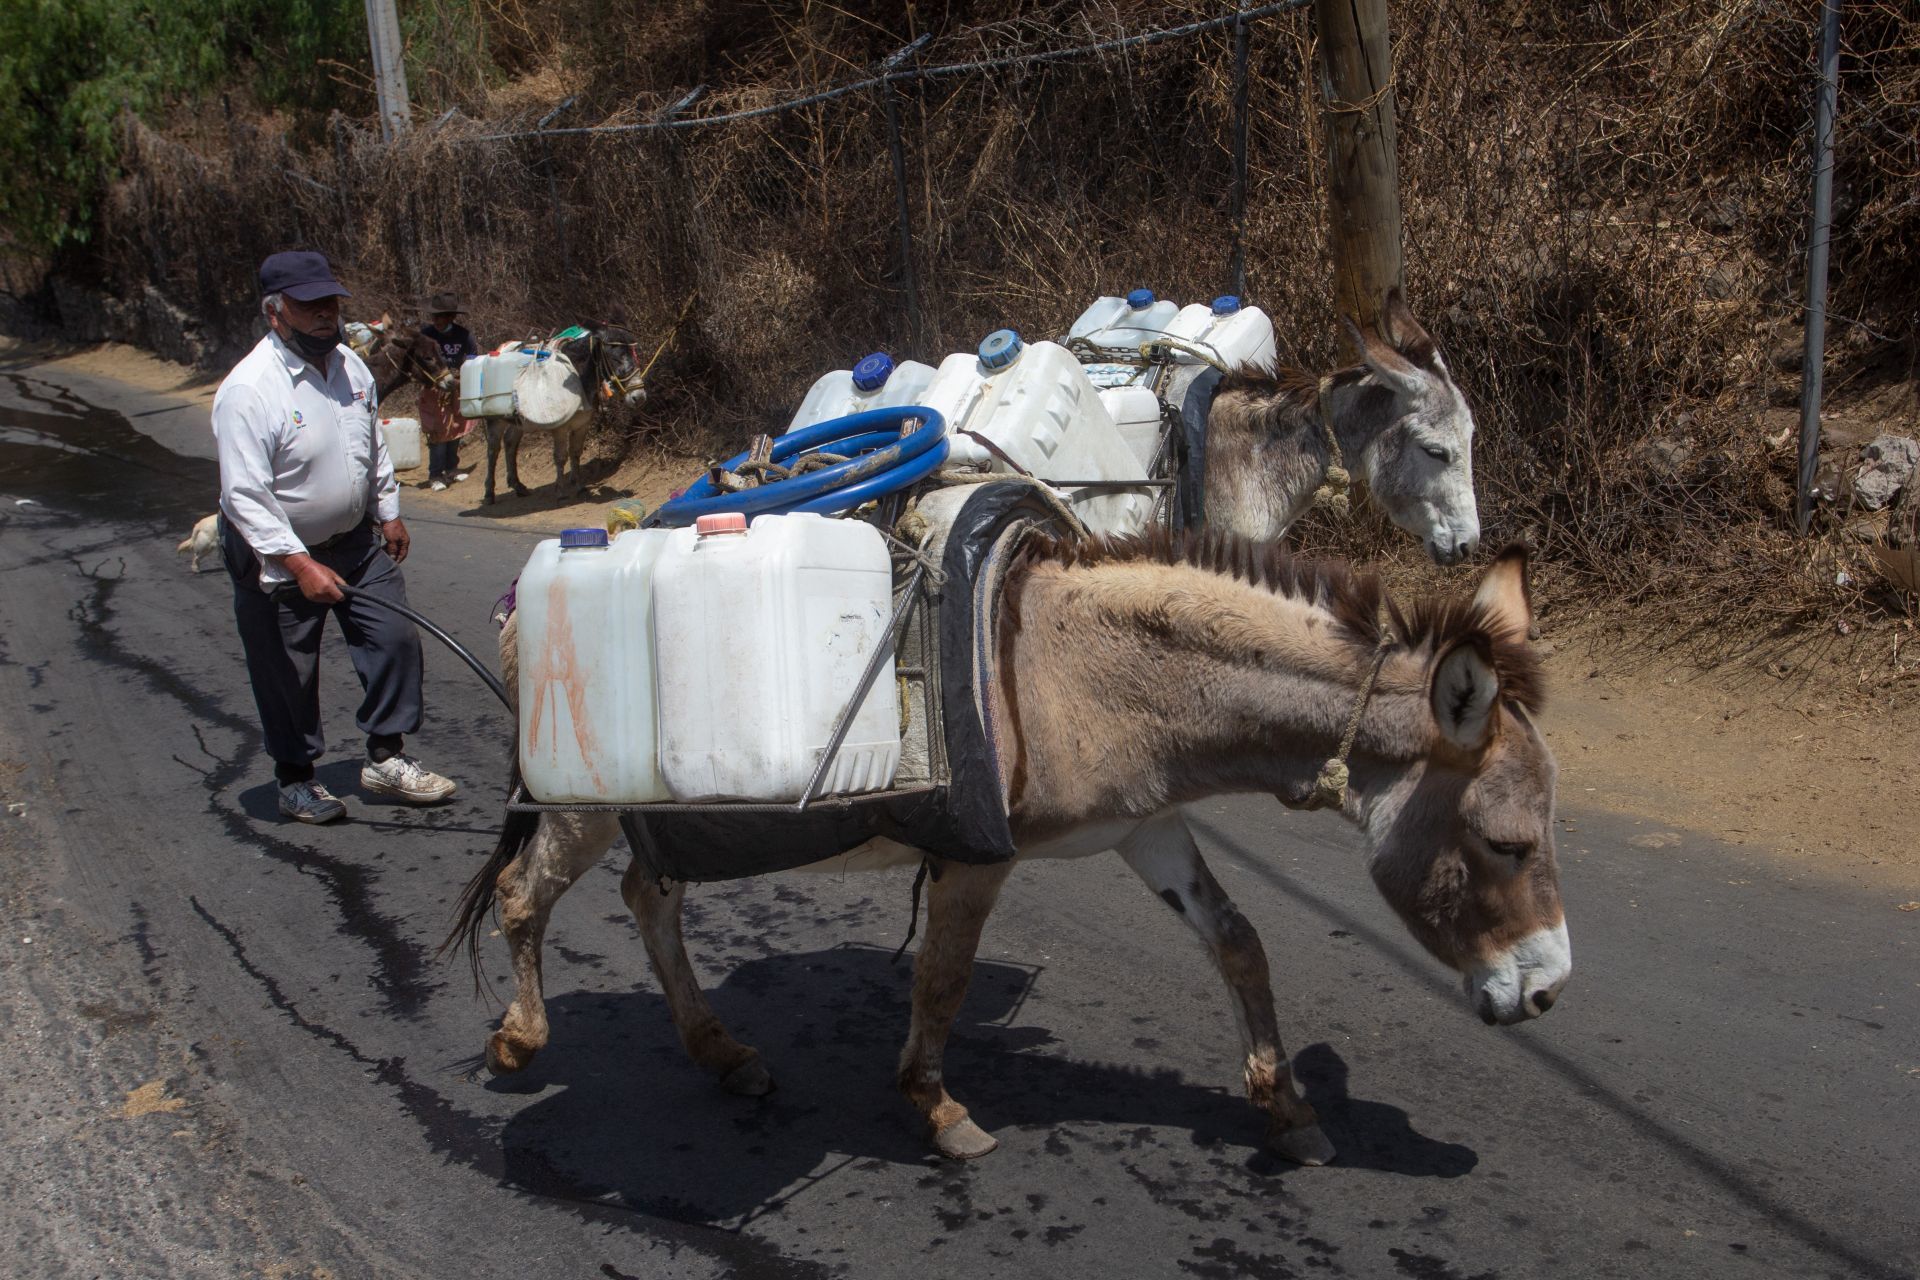 Guanajuato - Alcalde panista regala burros a niños para ir a la escuela en Guanajuato  - Página 4 DARGWIM46FGDJMEZCC666RVGFE